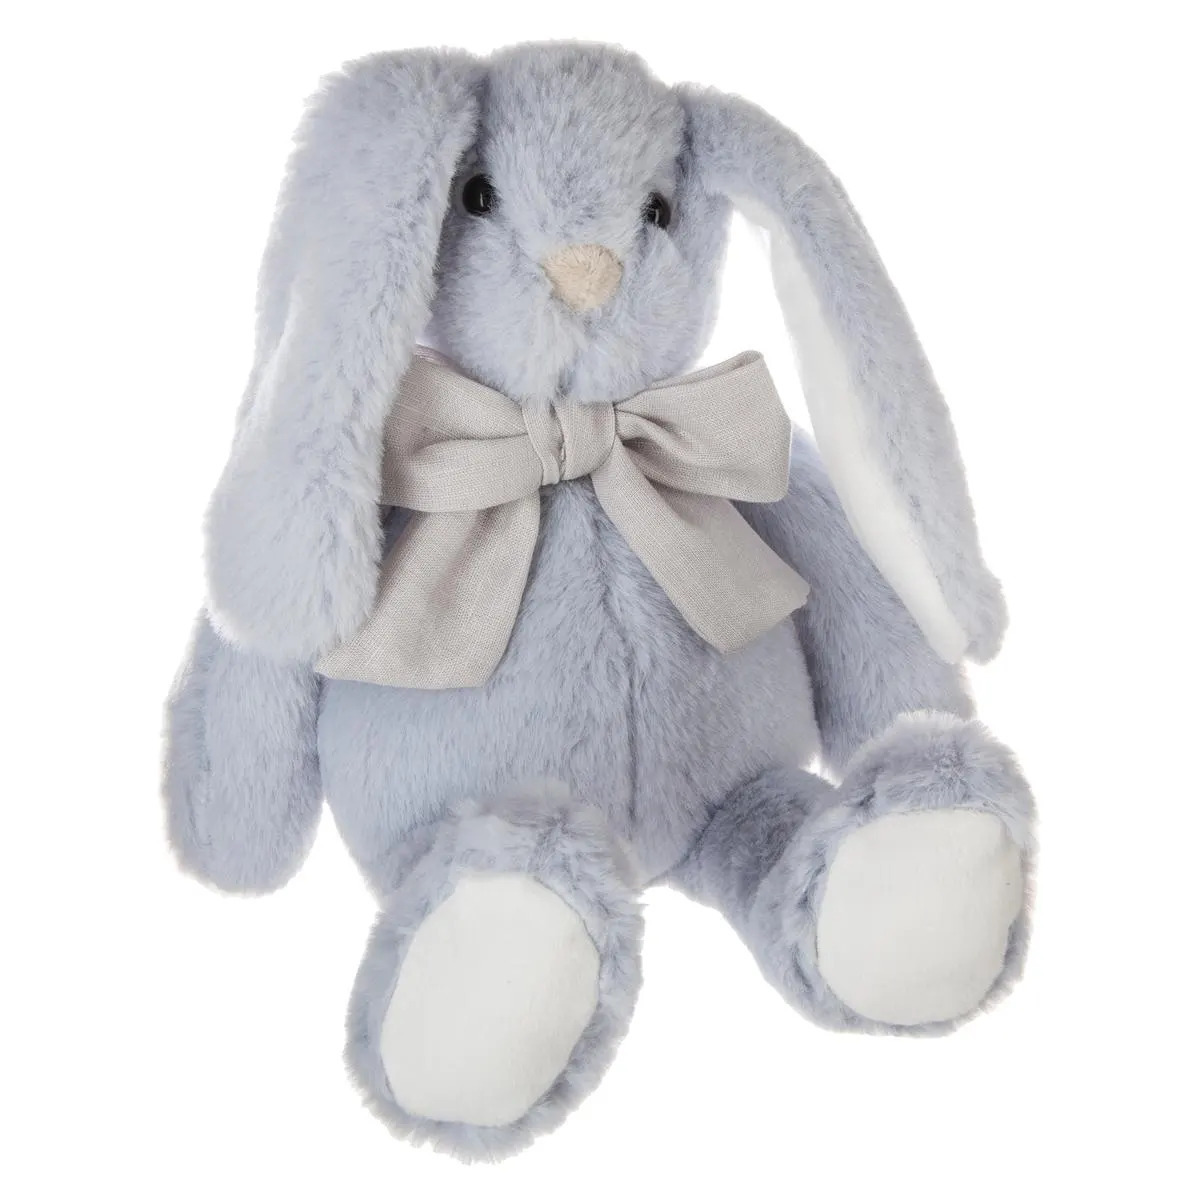 Knuffeldier konijn met strikje zachte pluche stof fluffy knuffels lichtblauw 30 cm